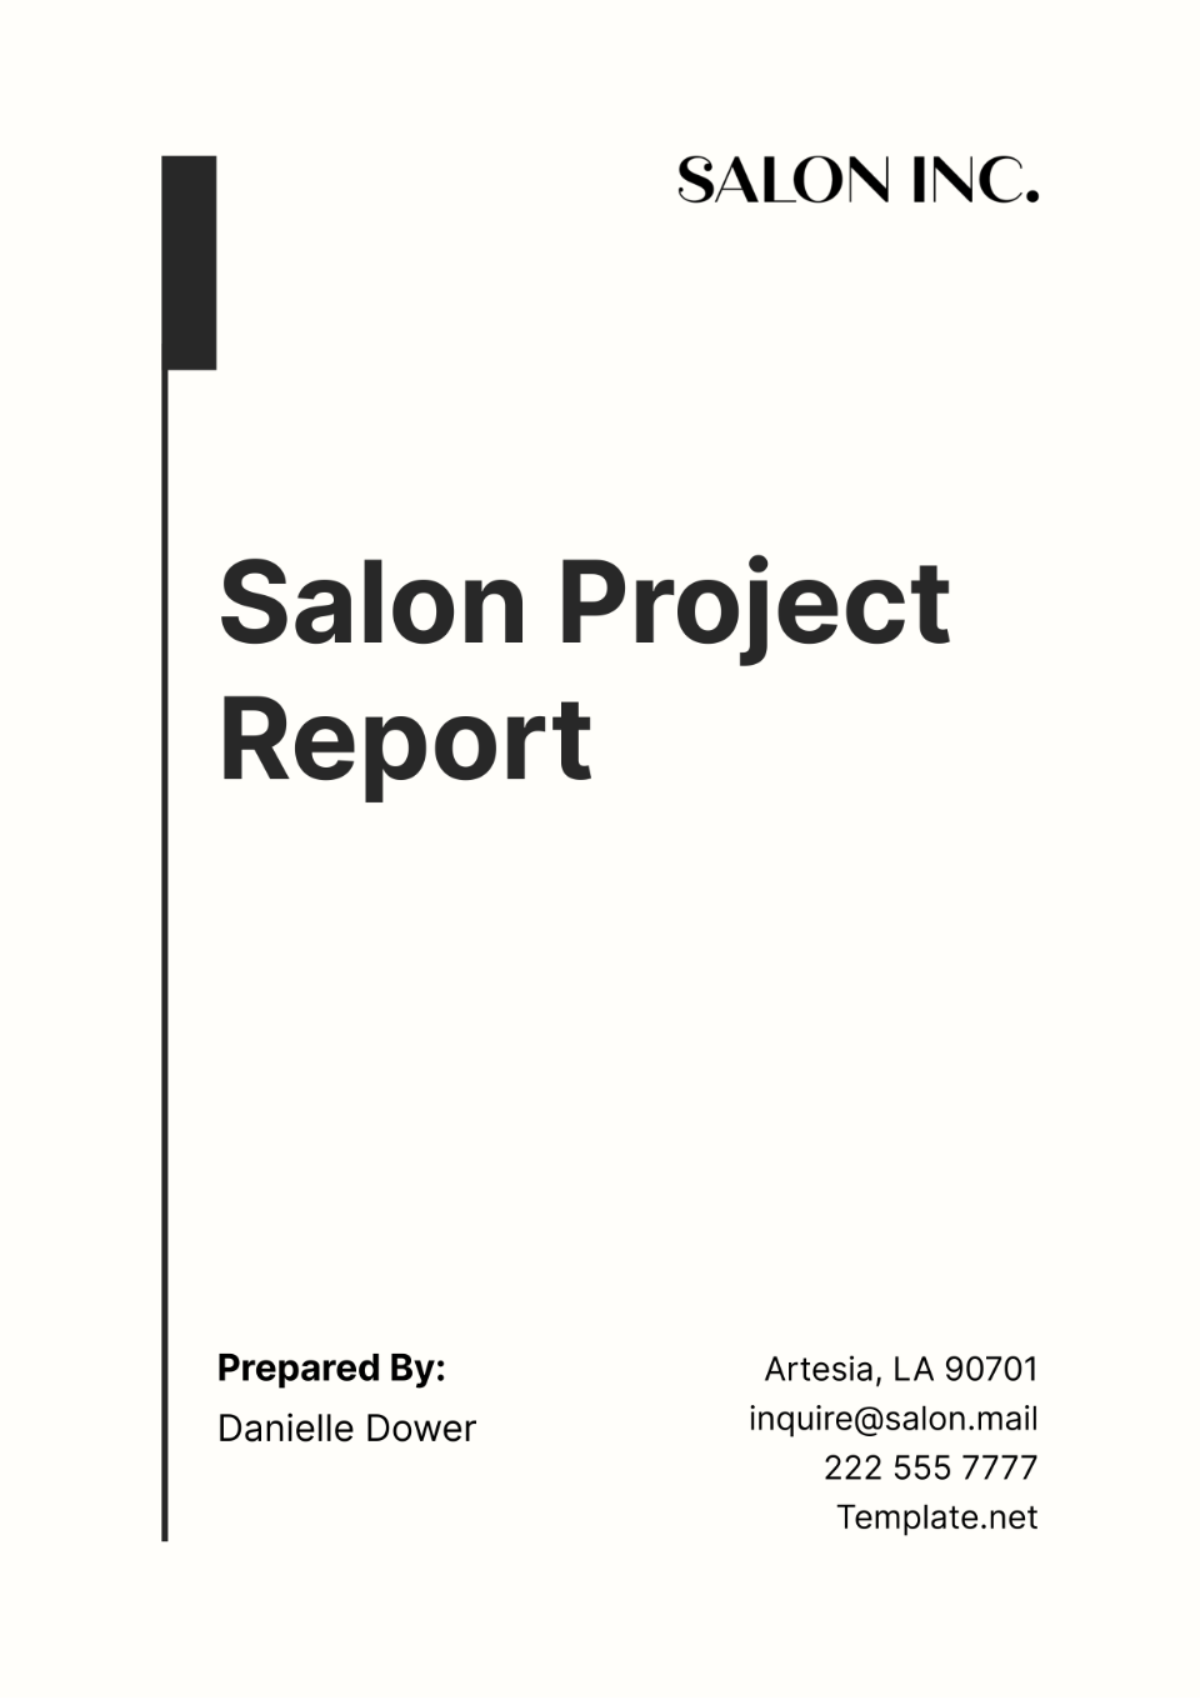 Salon Project Report Template